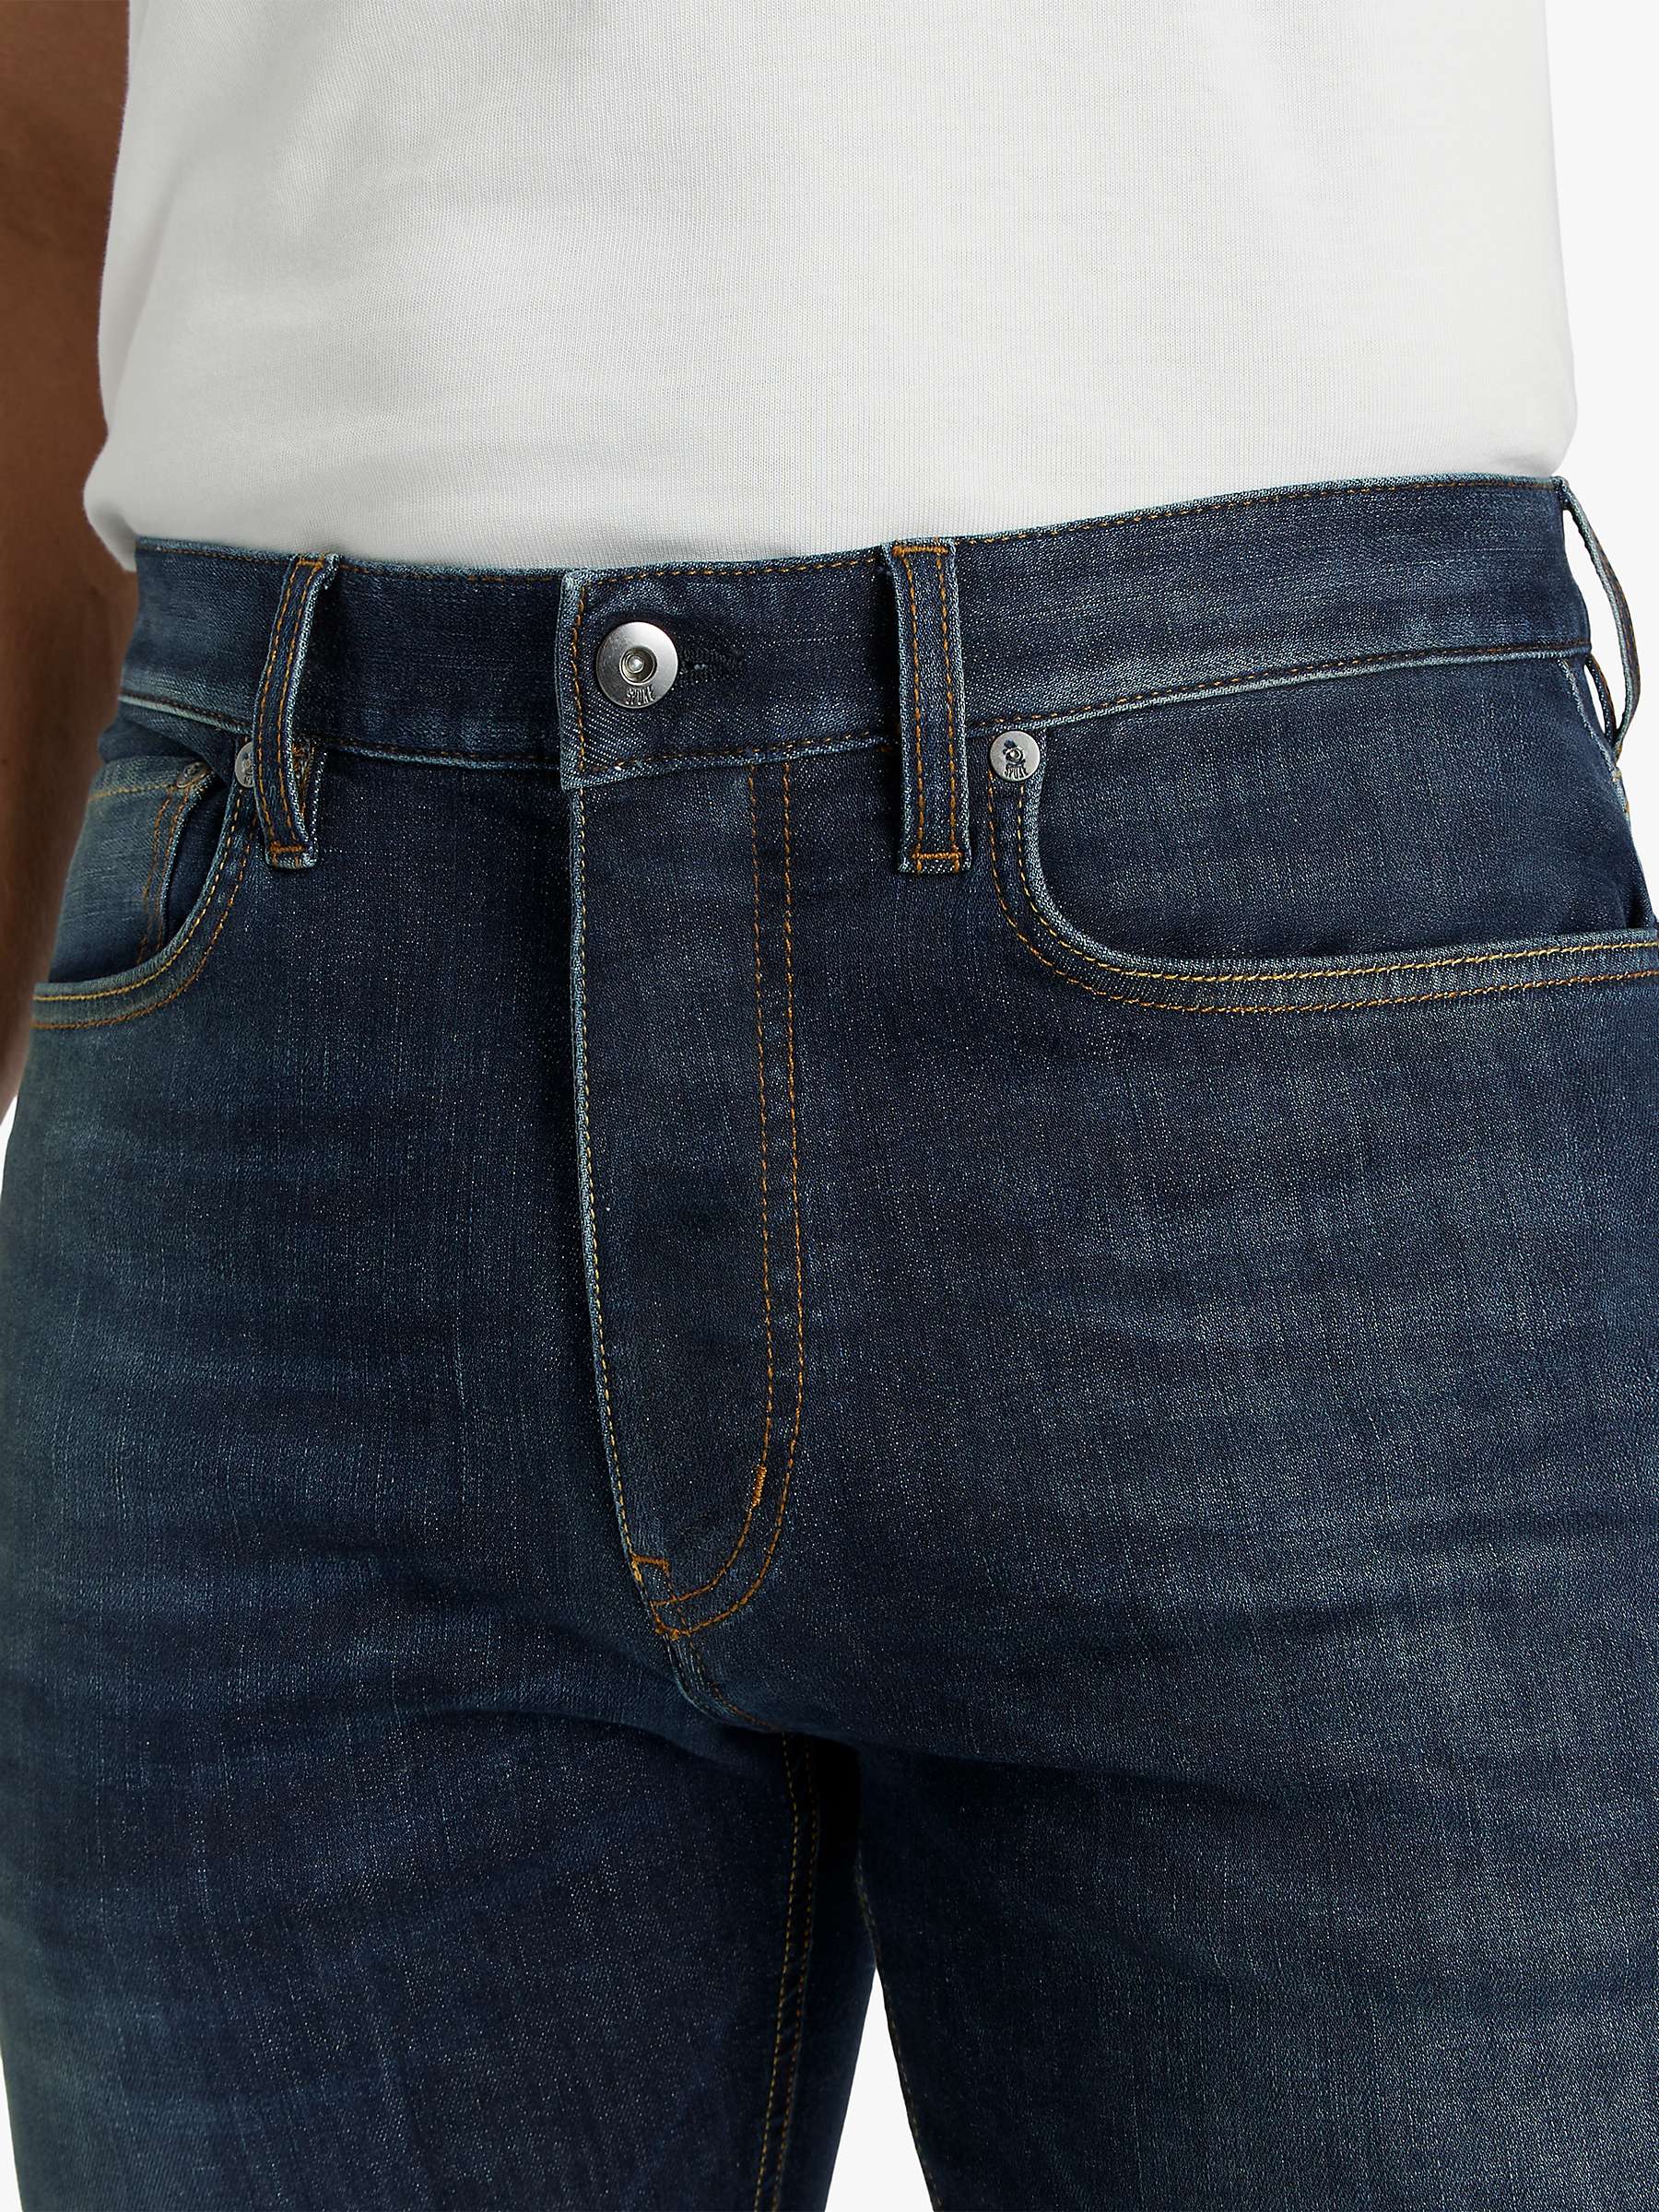 Buy SPOKE 10oz Travel Denim Slim Thigh Jeans Online at johnlewis.com